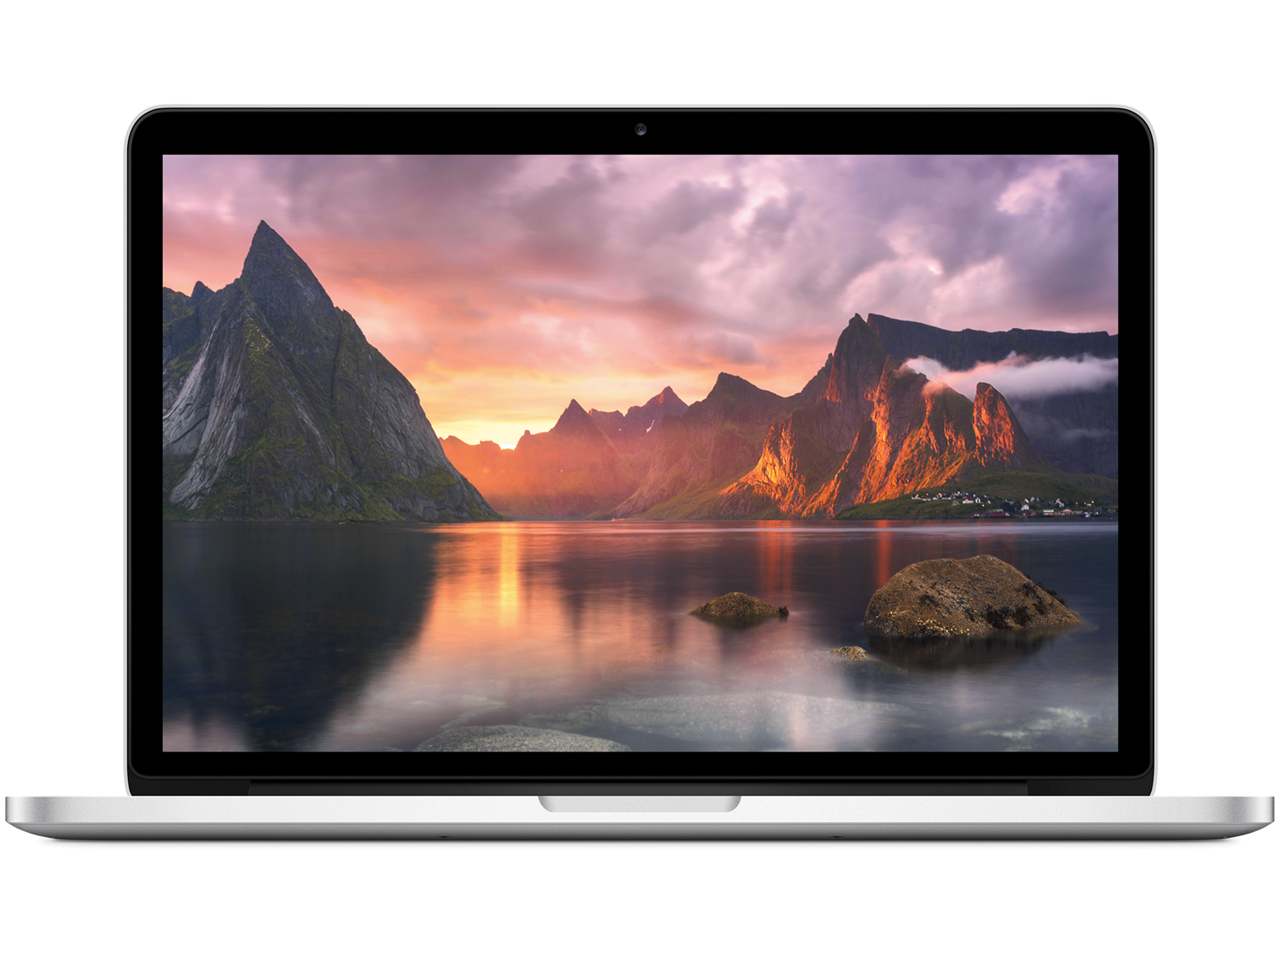 MacBook Pro Retinaディスプレイ 2400/13.3 ME865J/A の製品画像